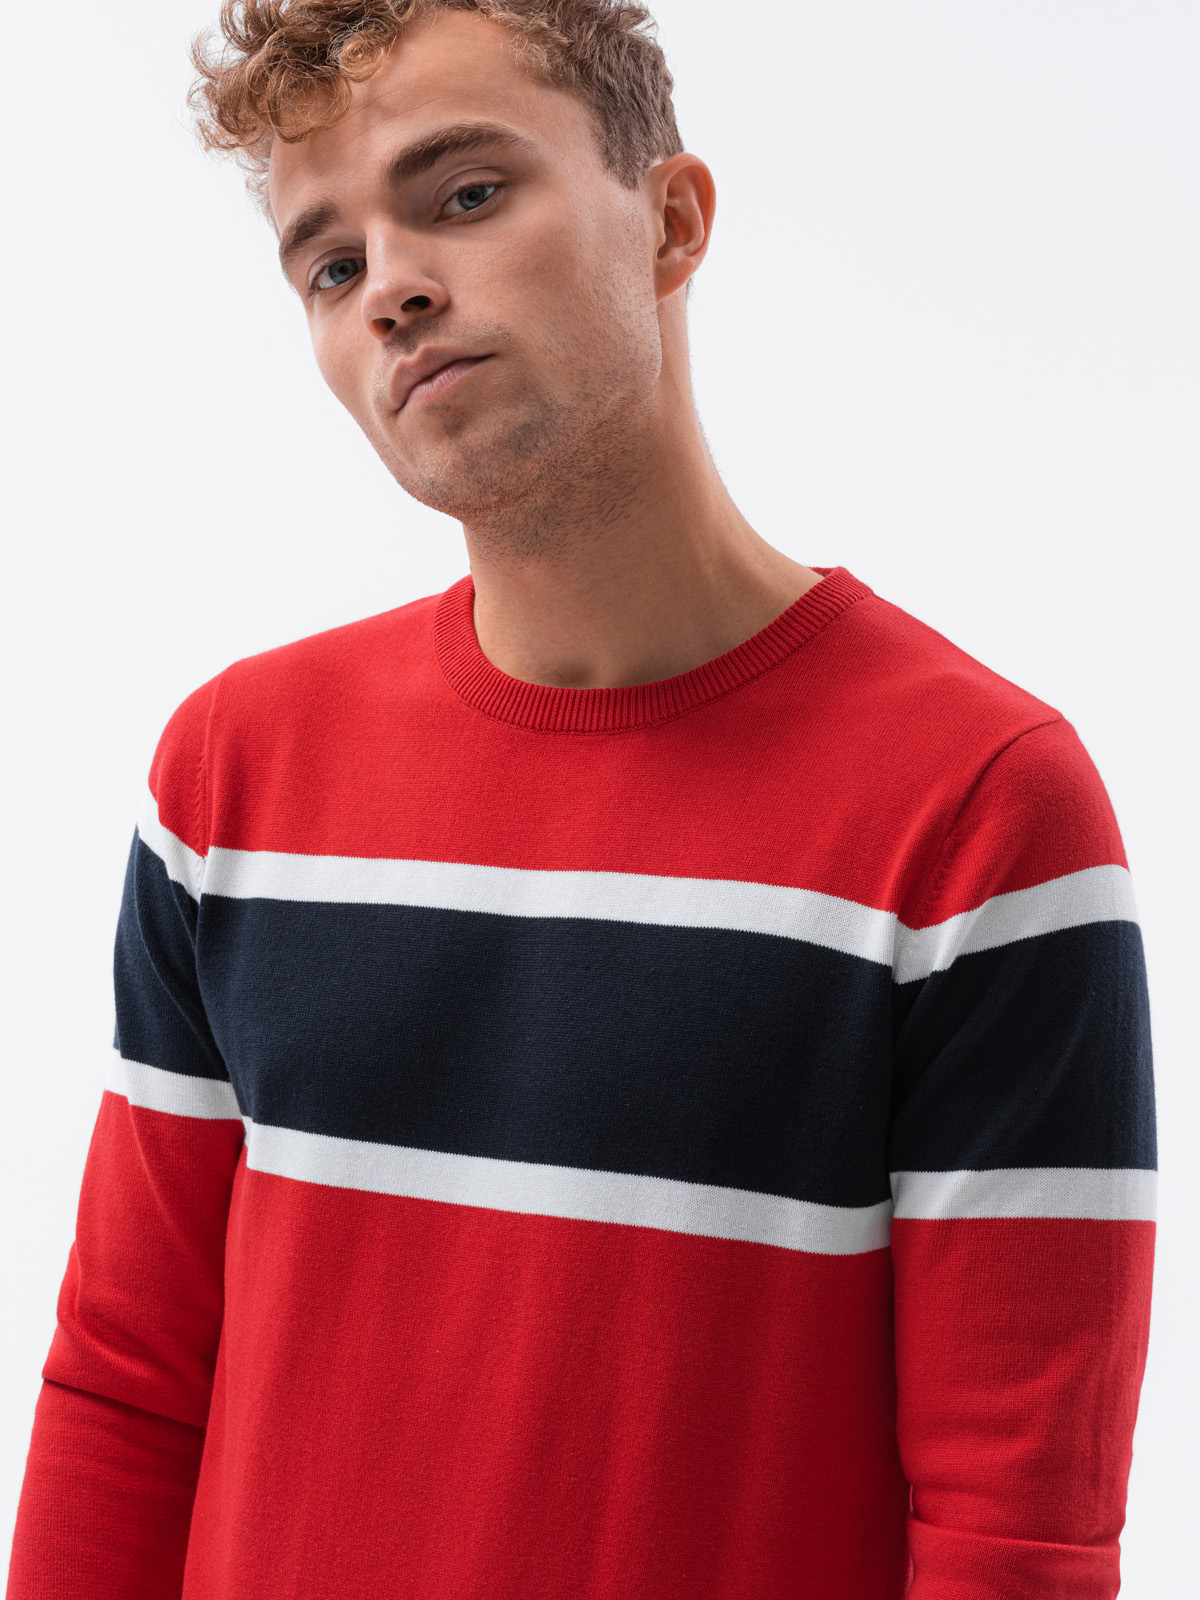 Men's sweater - red E190 | Ombre.com - Men's clothing online